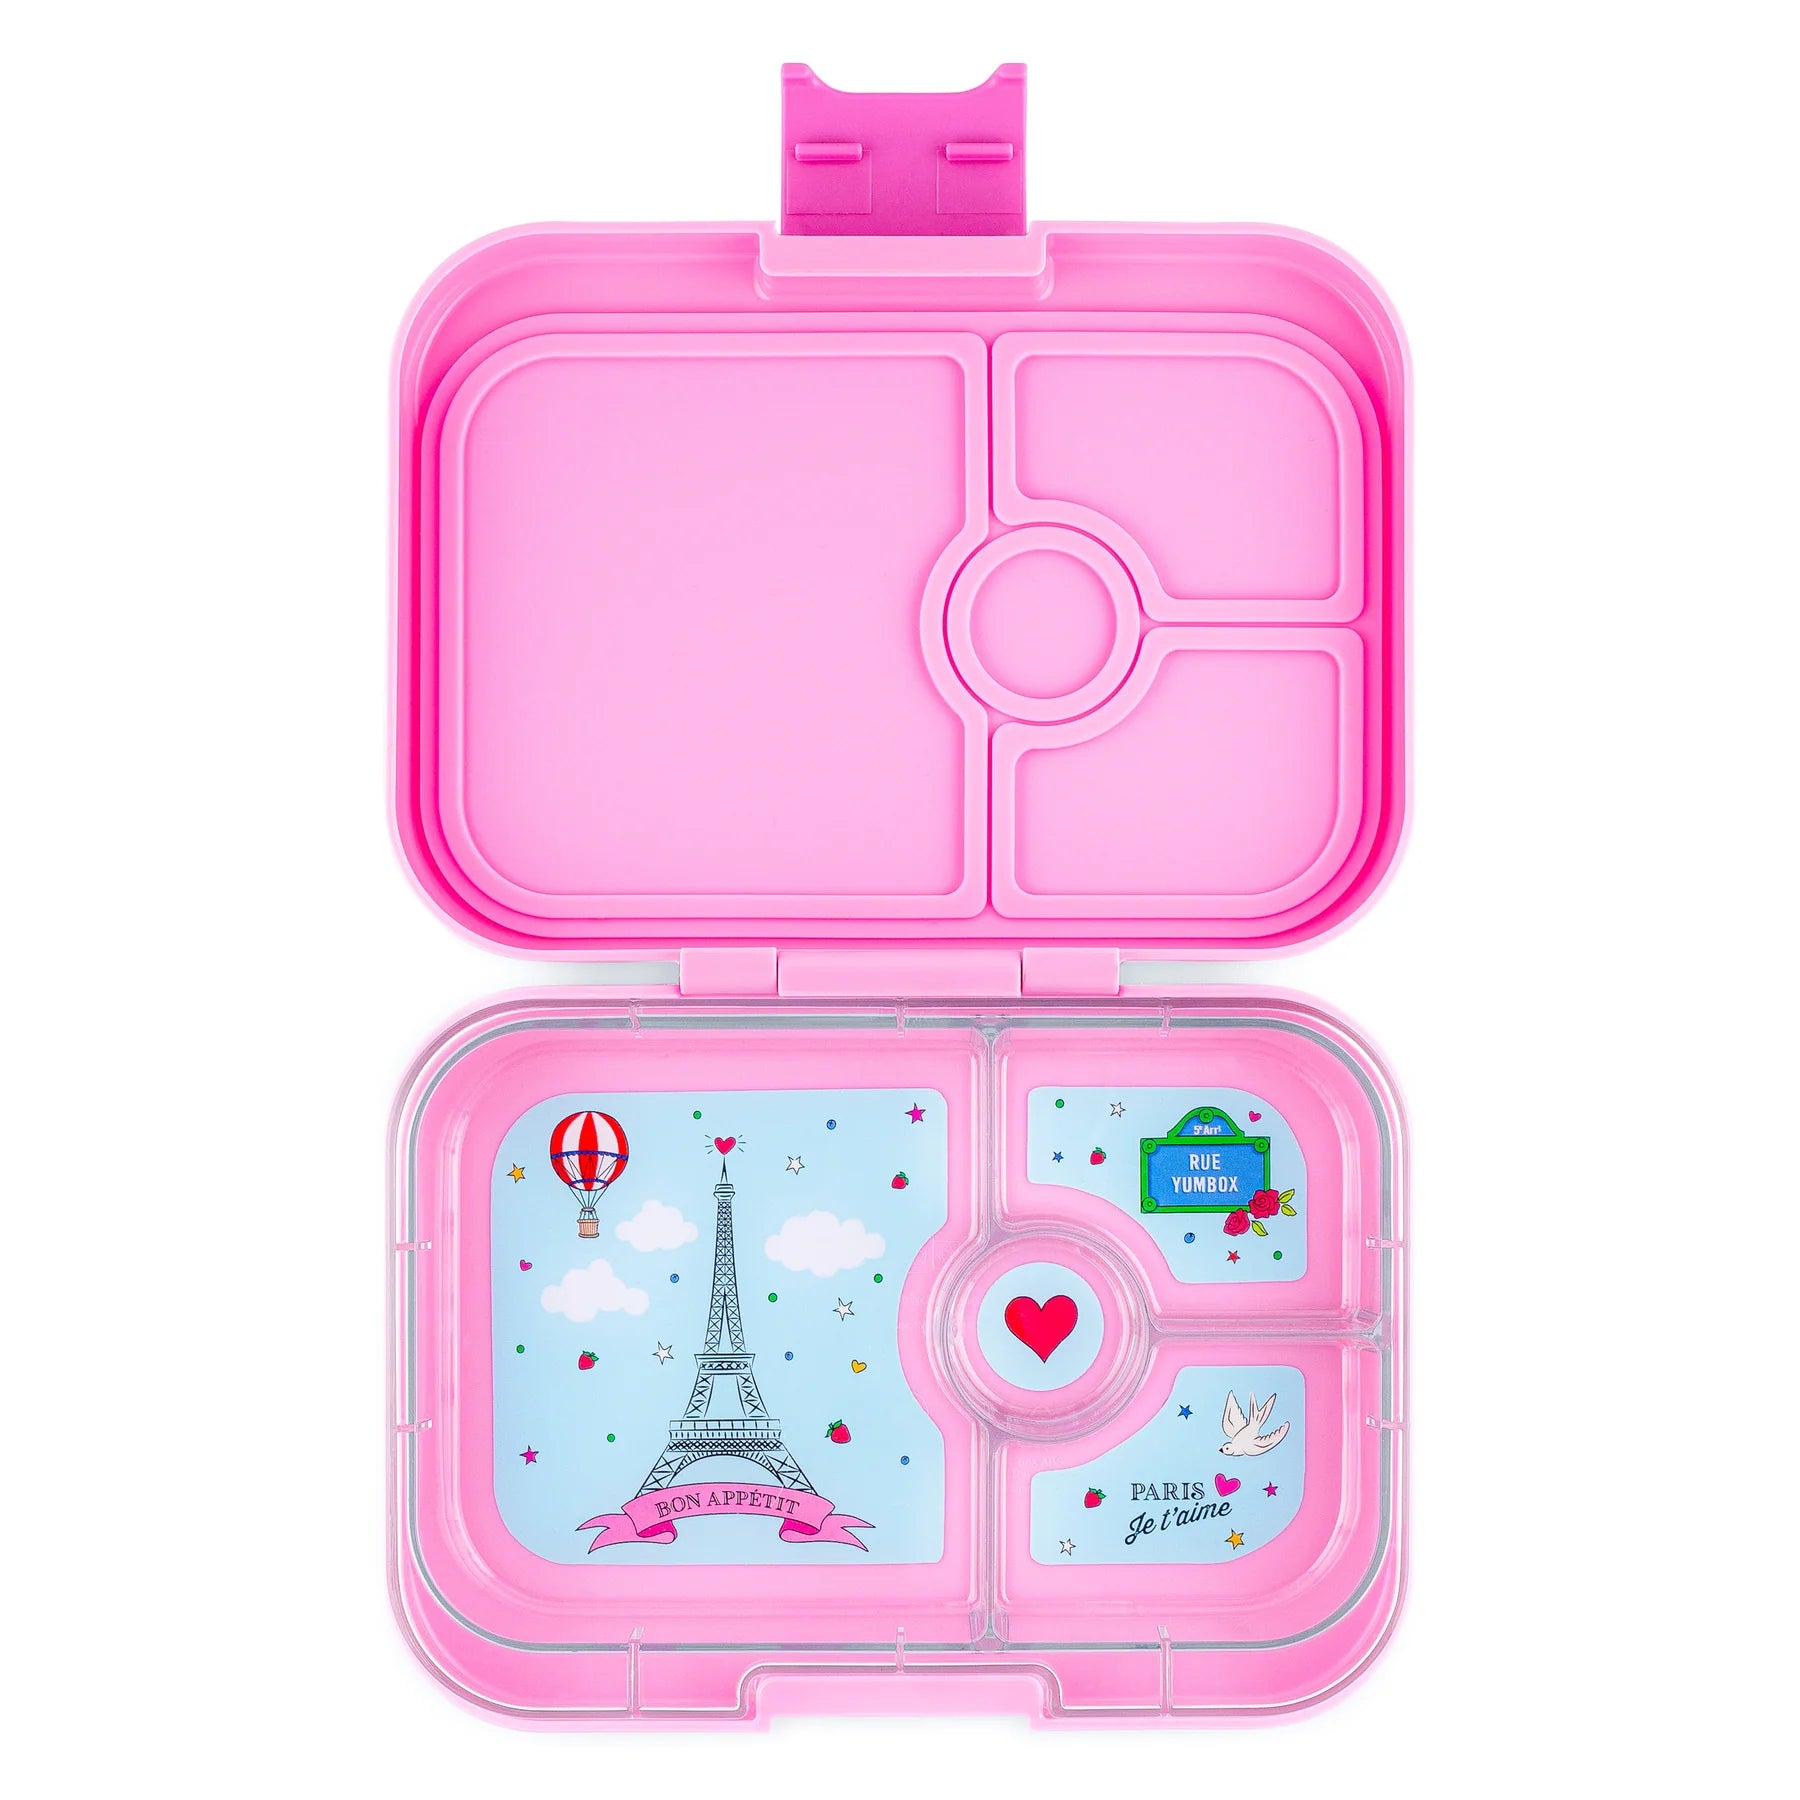 Yumbox Panino 4-Compartment Food Tray - Fifi Pink/Paris Je T'aime Tray